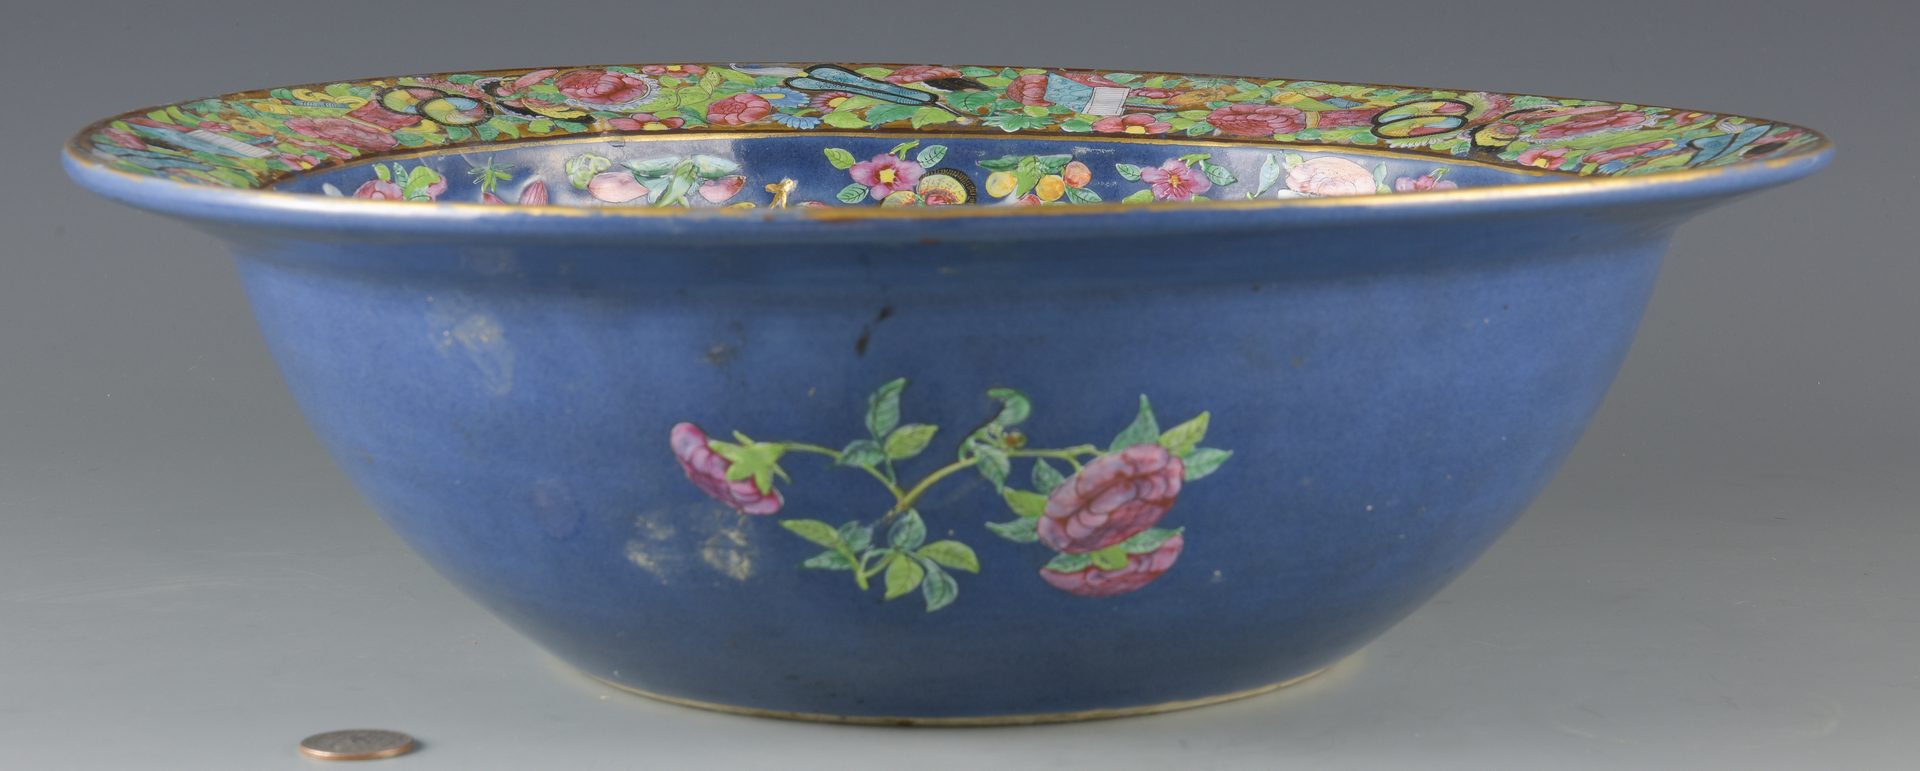 Lot 28: Large Chinese Famille Rose Enameled Bowl